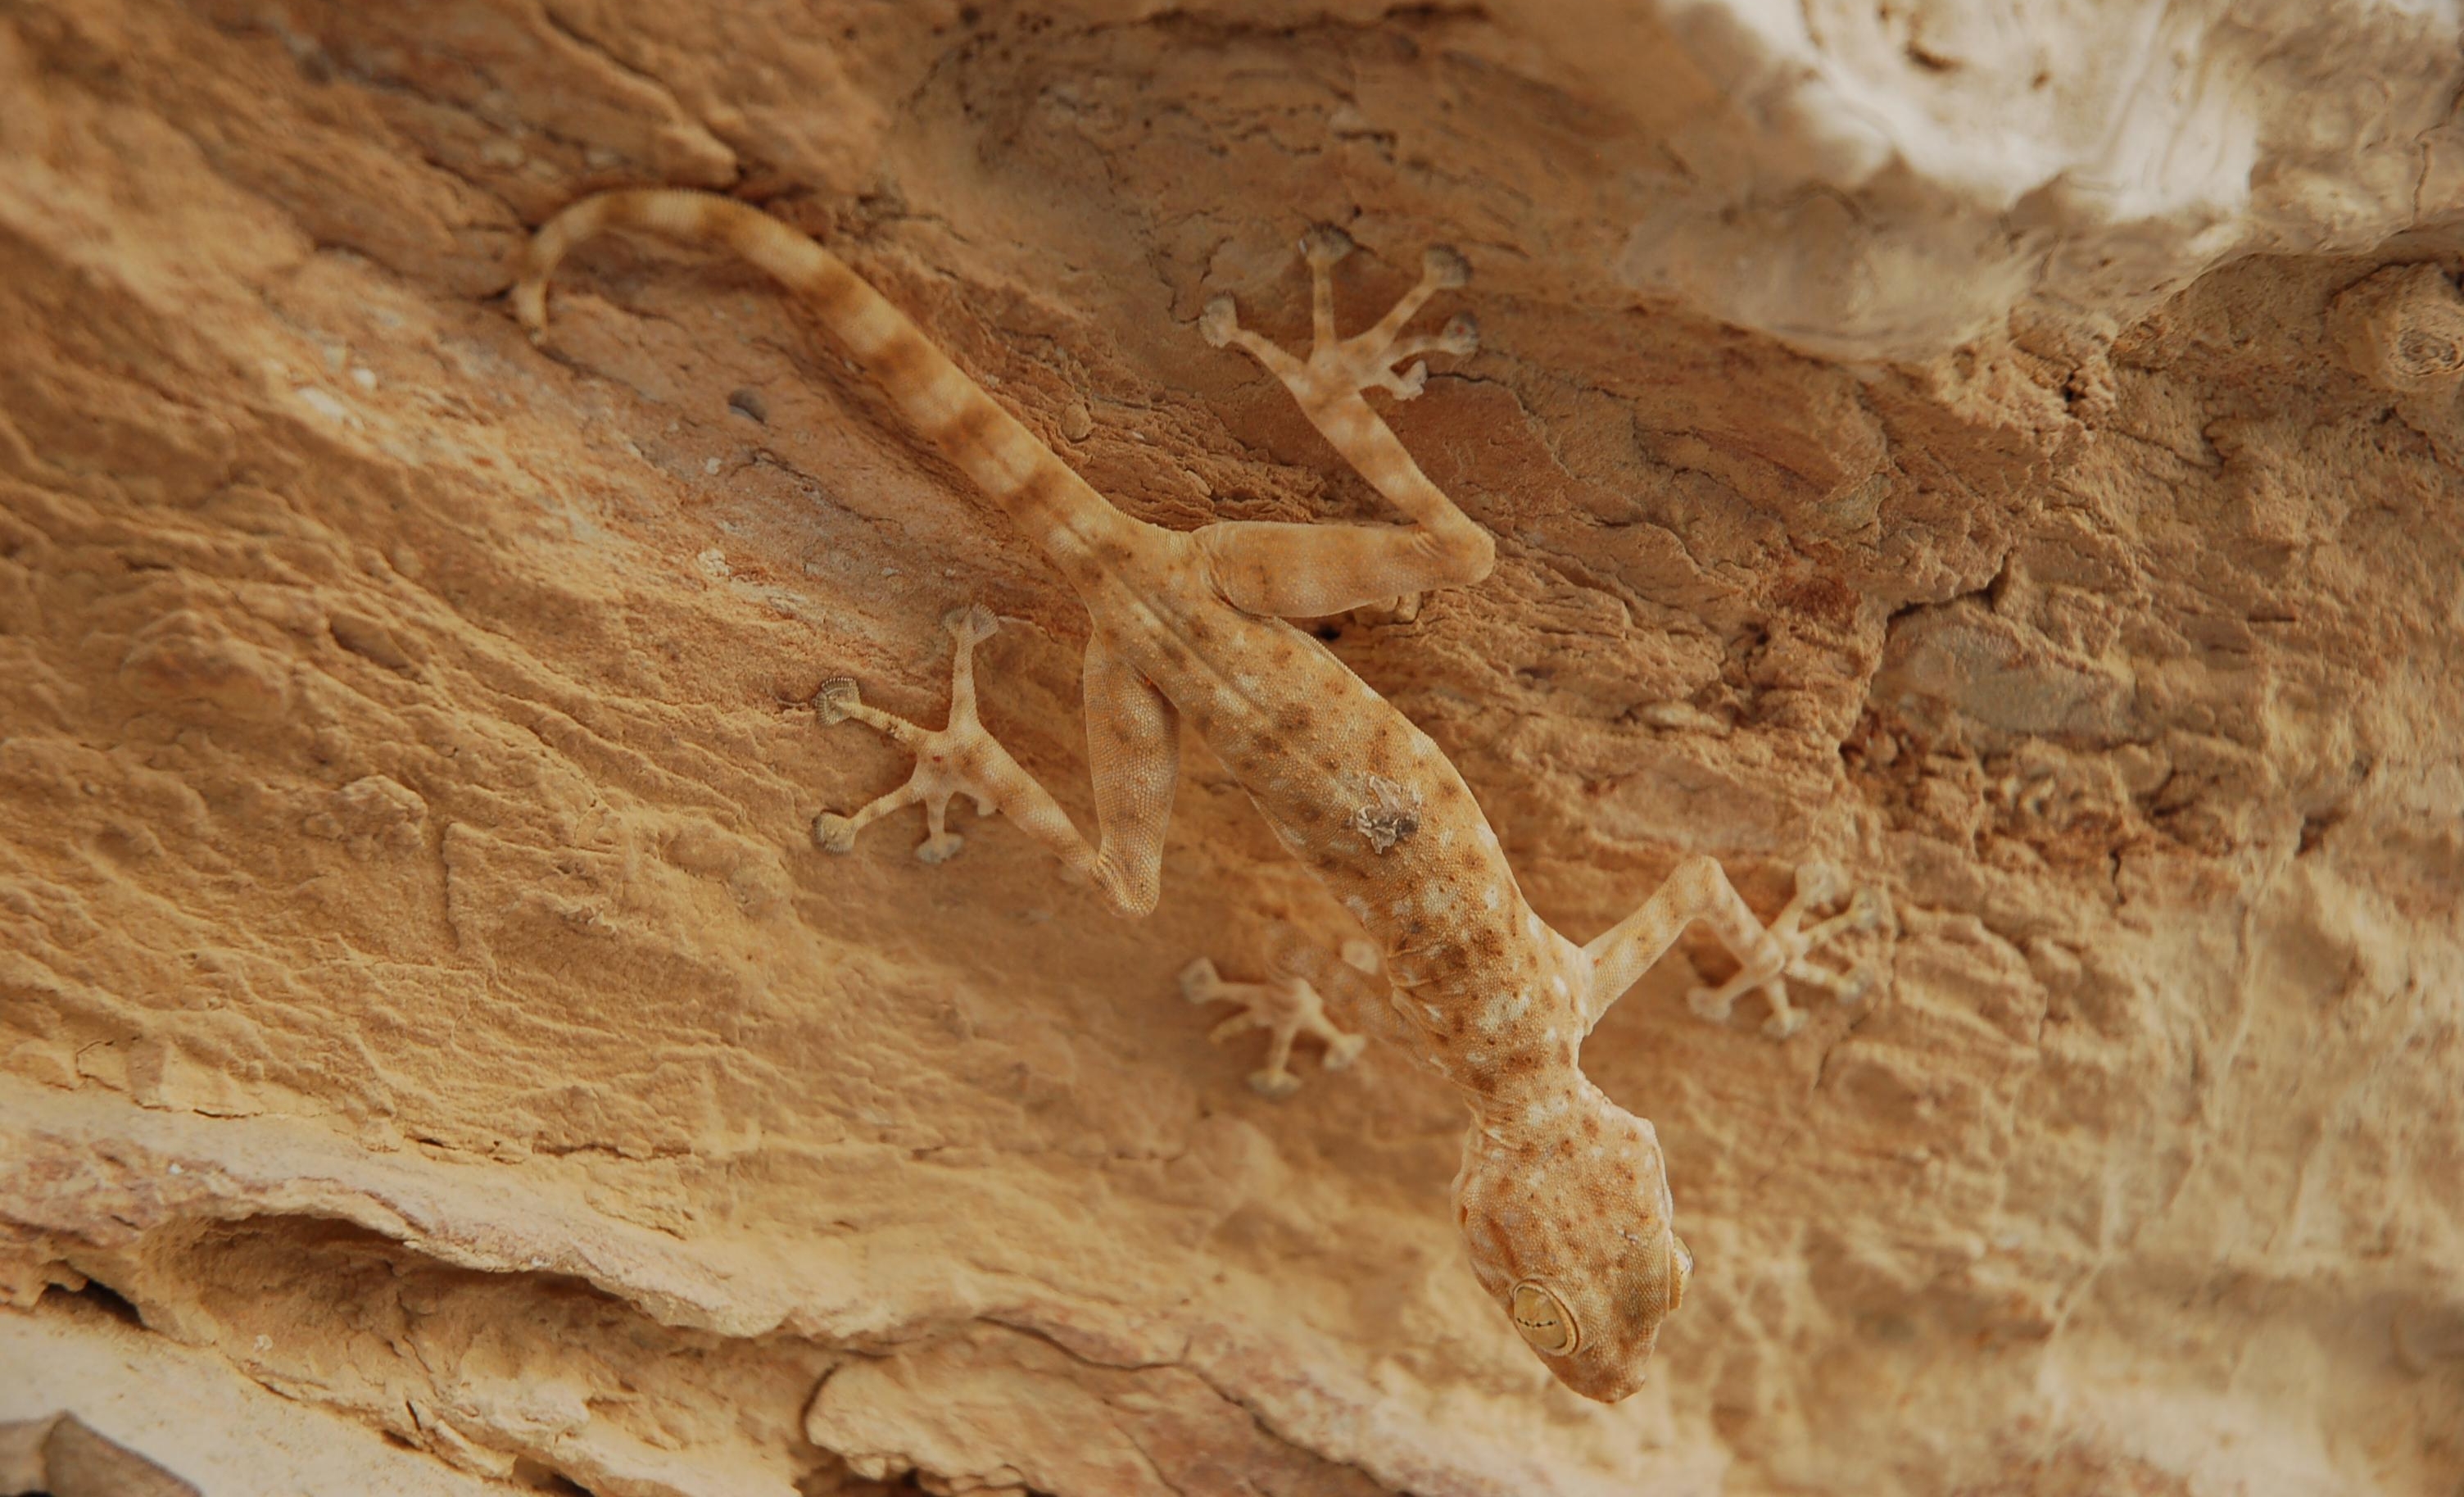 Stenodactylus sthenodactylus judean desert